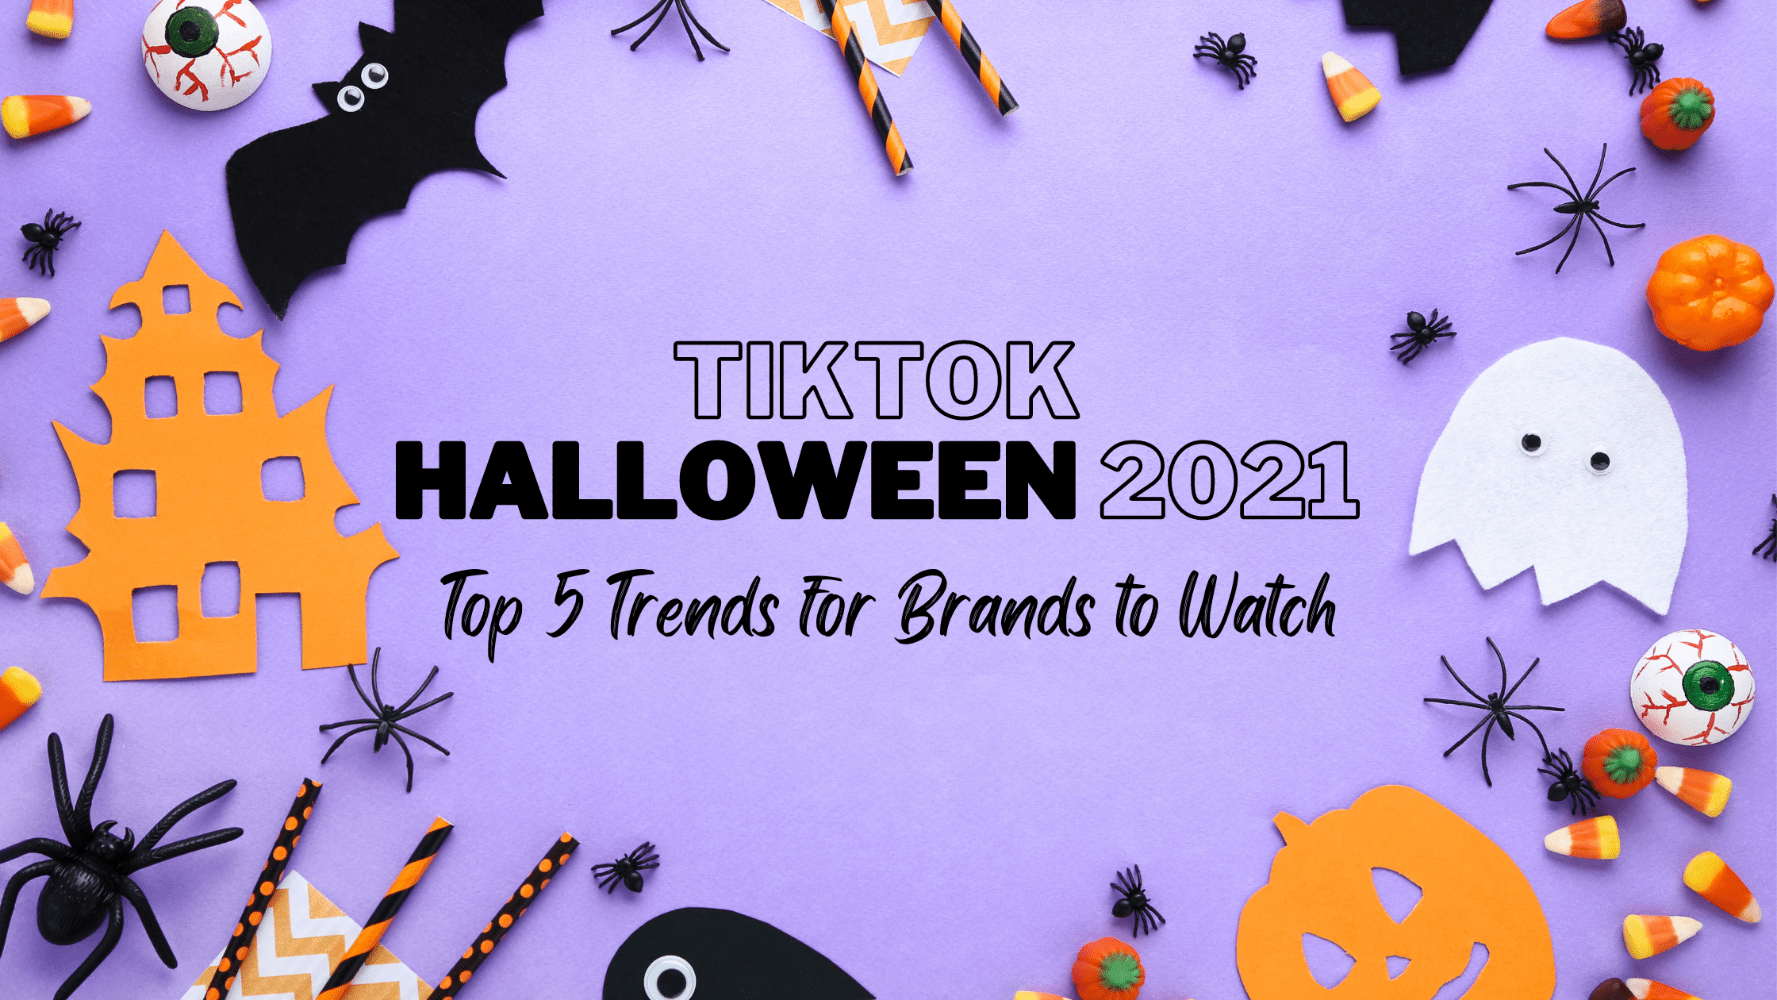 Fanbytes | Gen Z Marketing | Tiktok Halloween - Top Tips for Brands